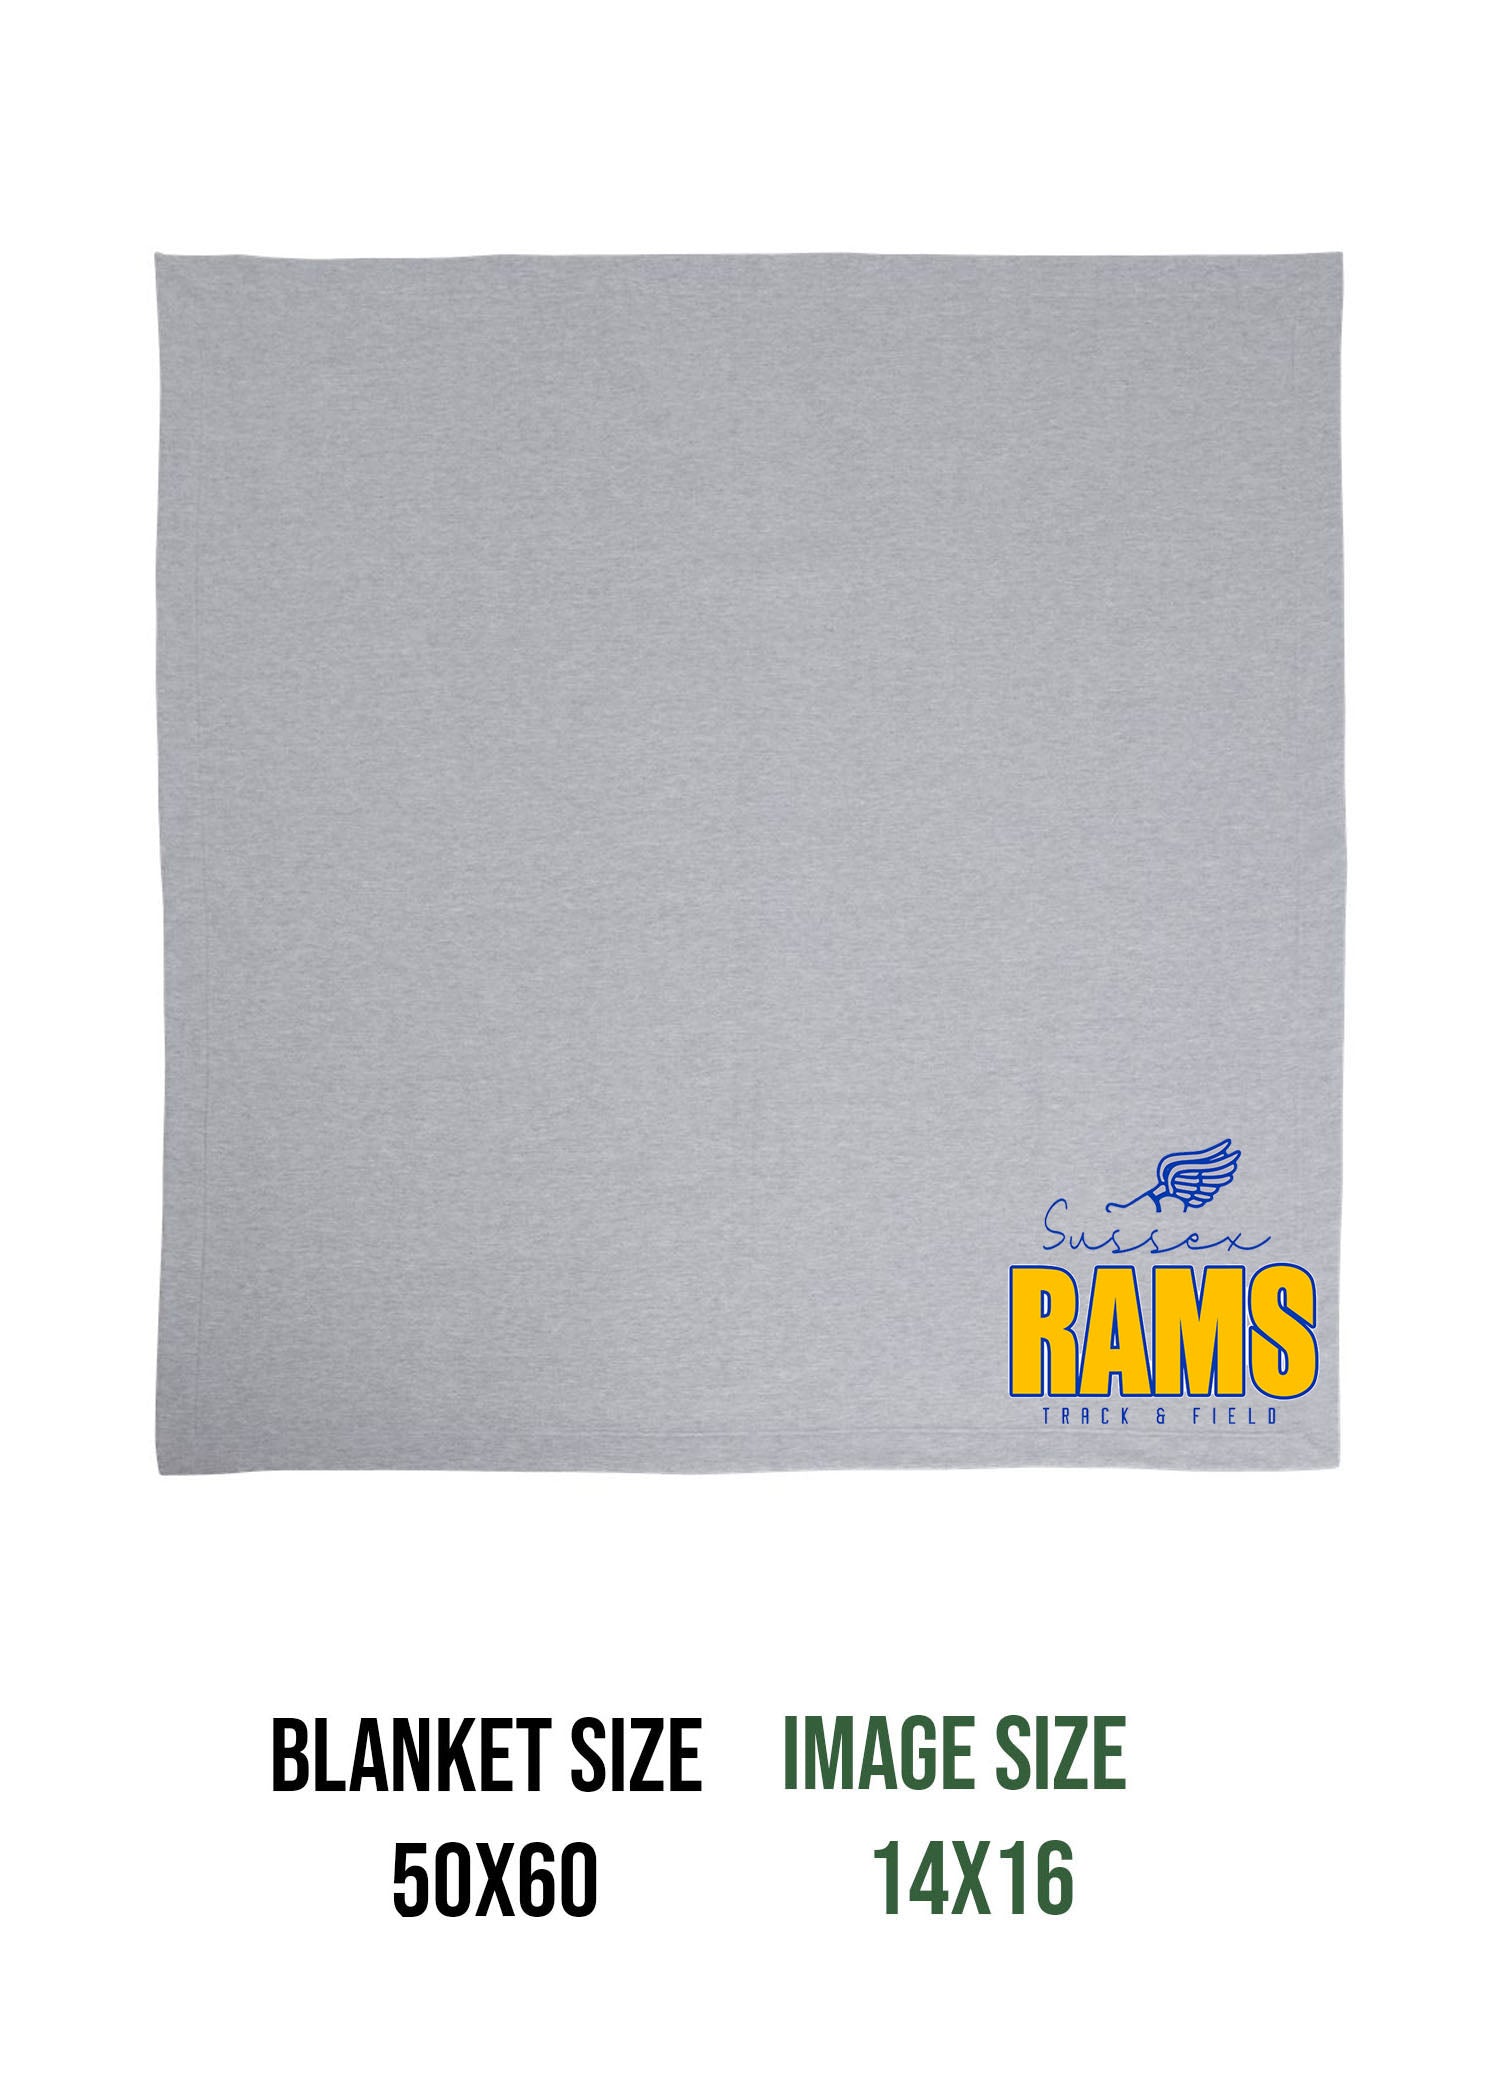 Sussex Rams Track Blanket Design 4